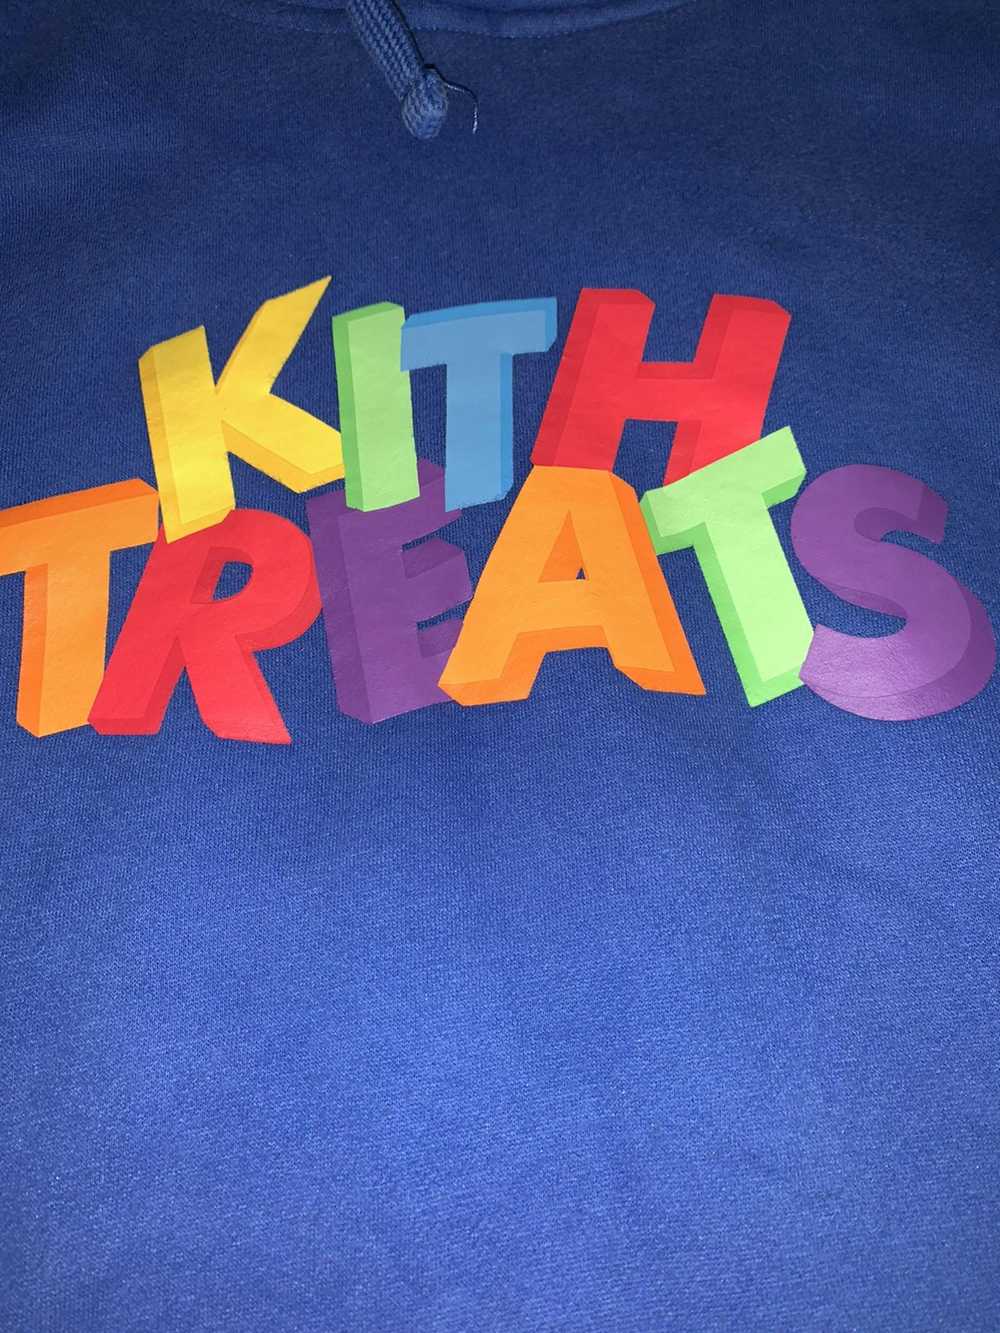 Kith Kith Treats Hoodie Royal Blue Size Medium - image 2